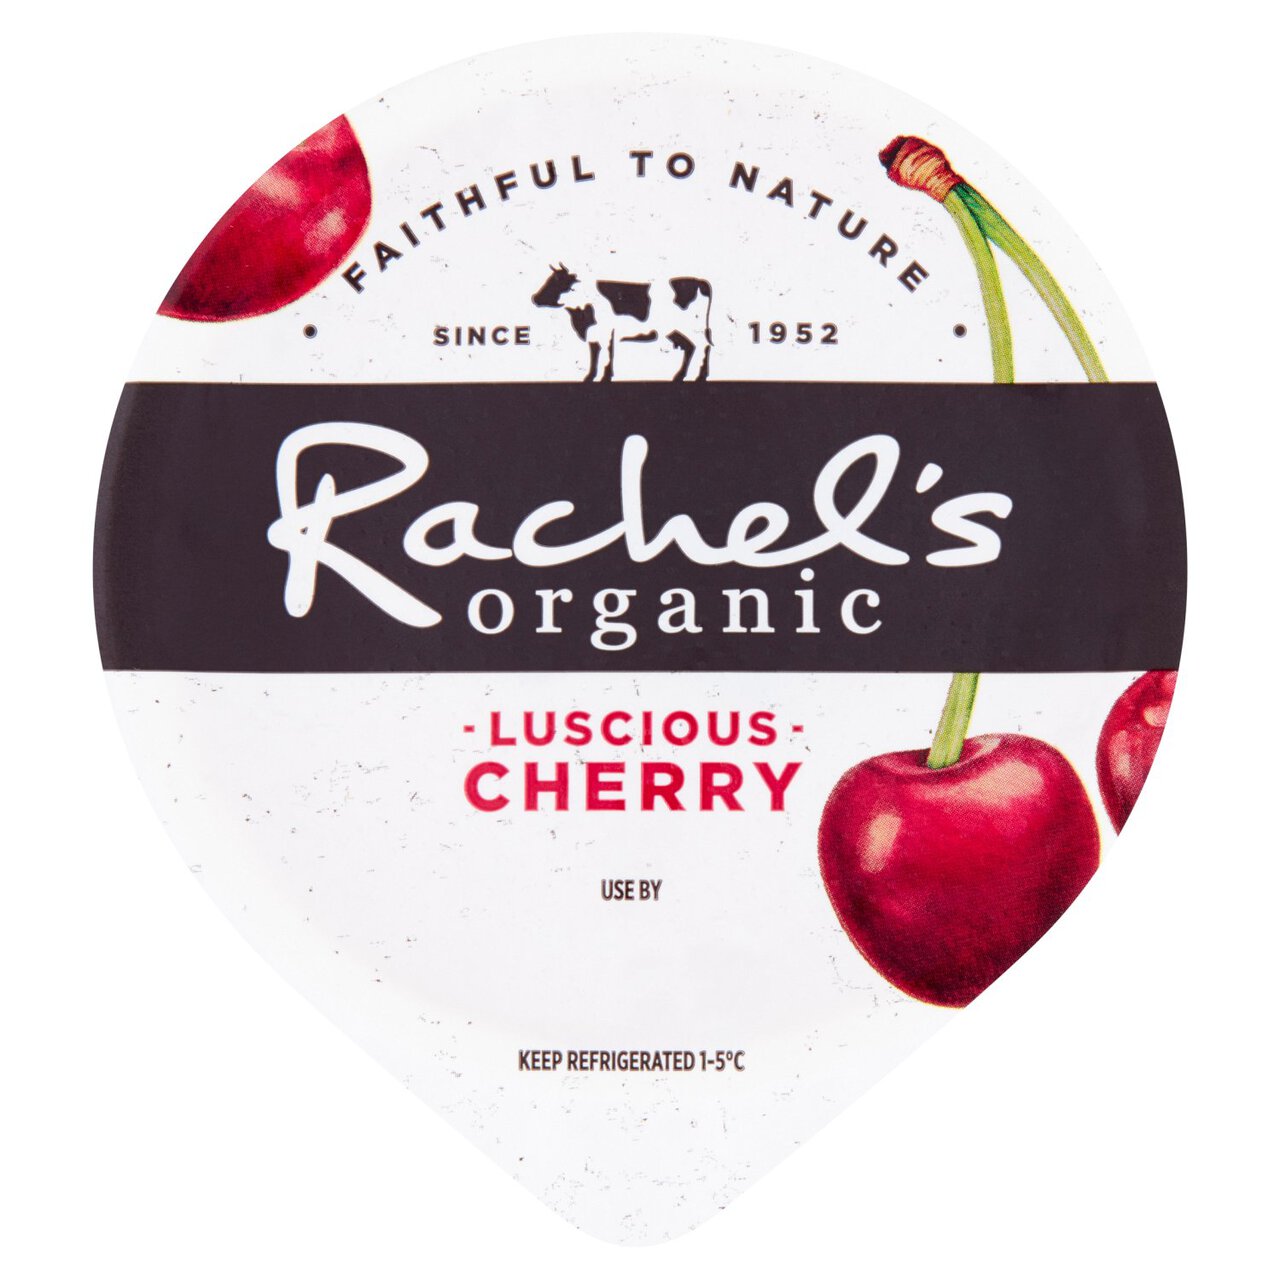 Rachel's Organic Luscious Cherry Yoghurt 150g